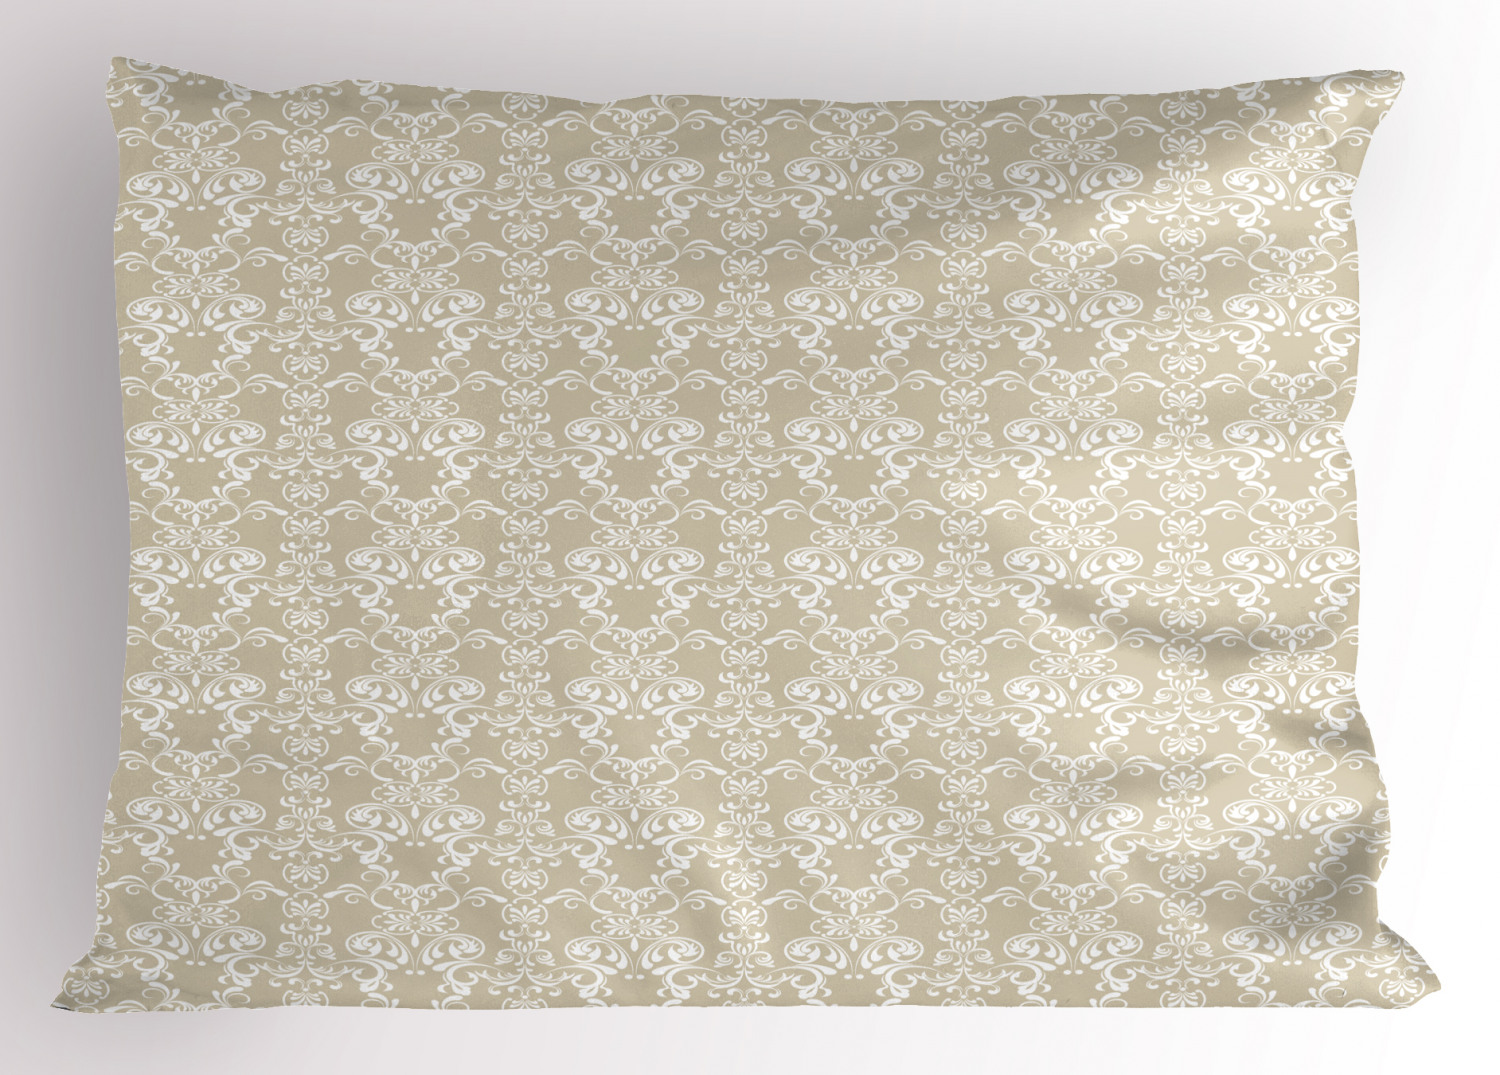 Beige Pillow Sham Decorative Pillowcase 3 Sizes Available for Bedroom Decor 